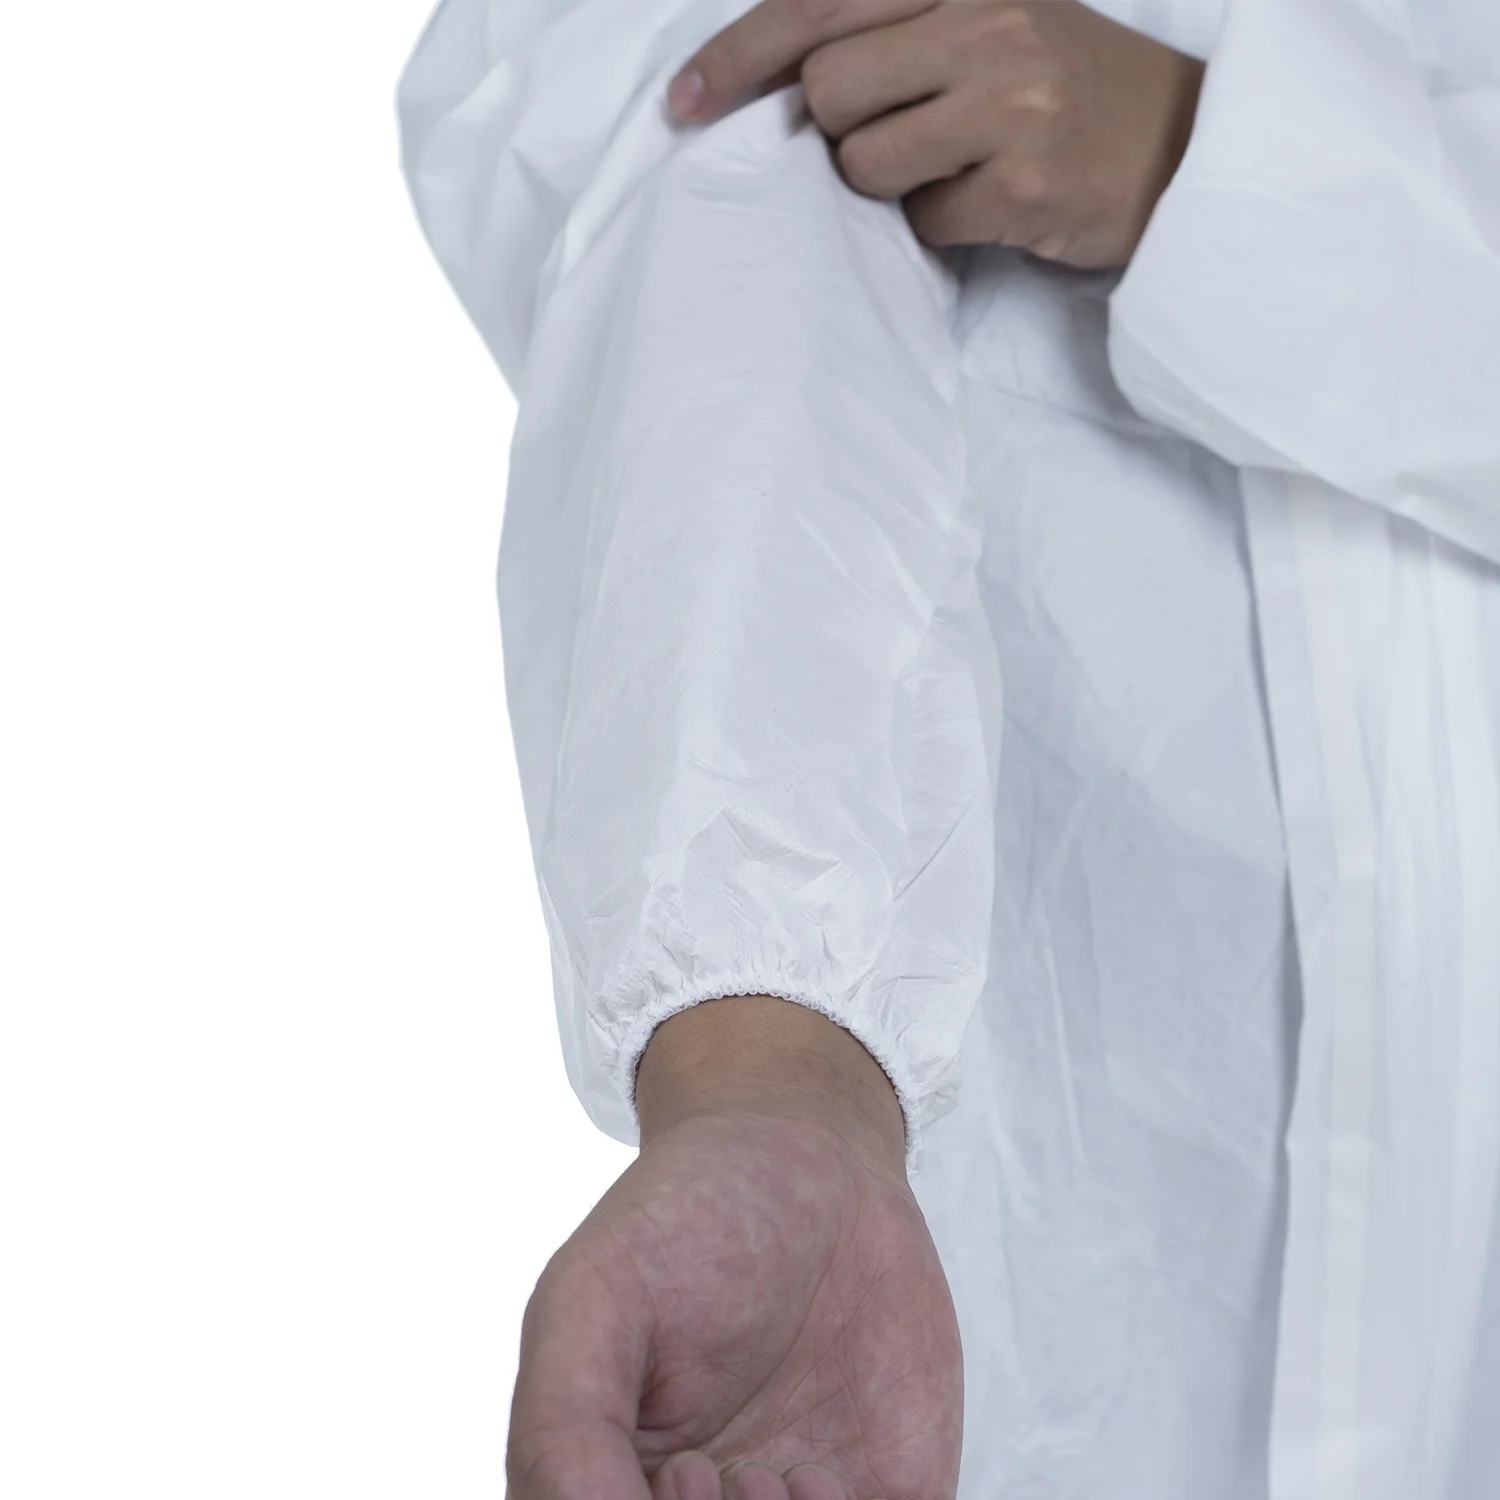 Splash Resistant Non-woven Protection Uniform Disposable Coverall